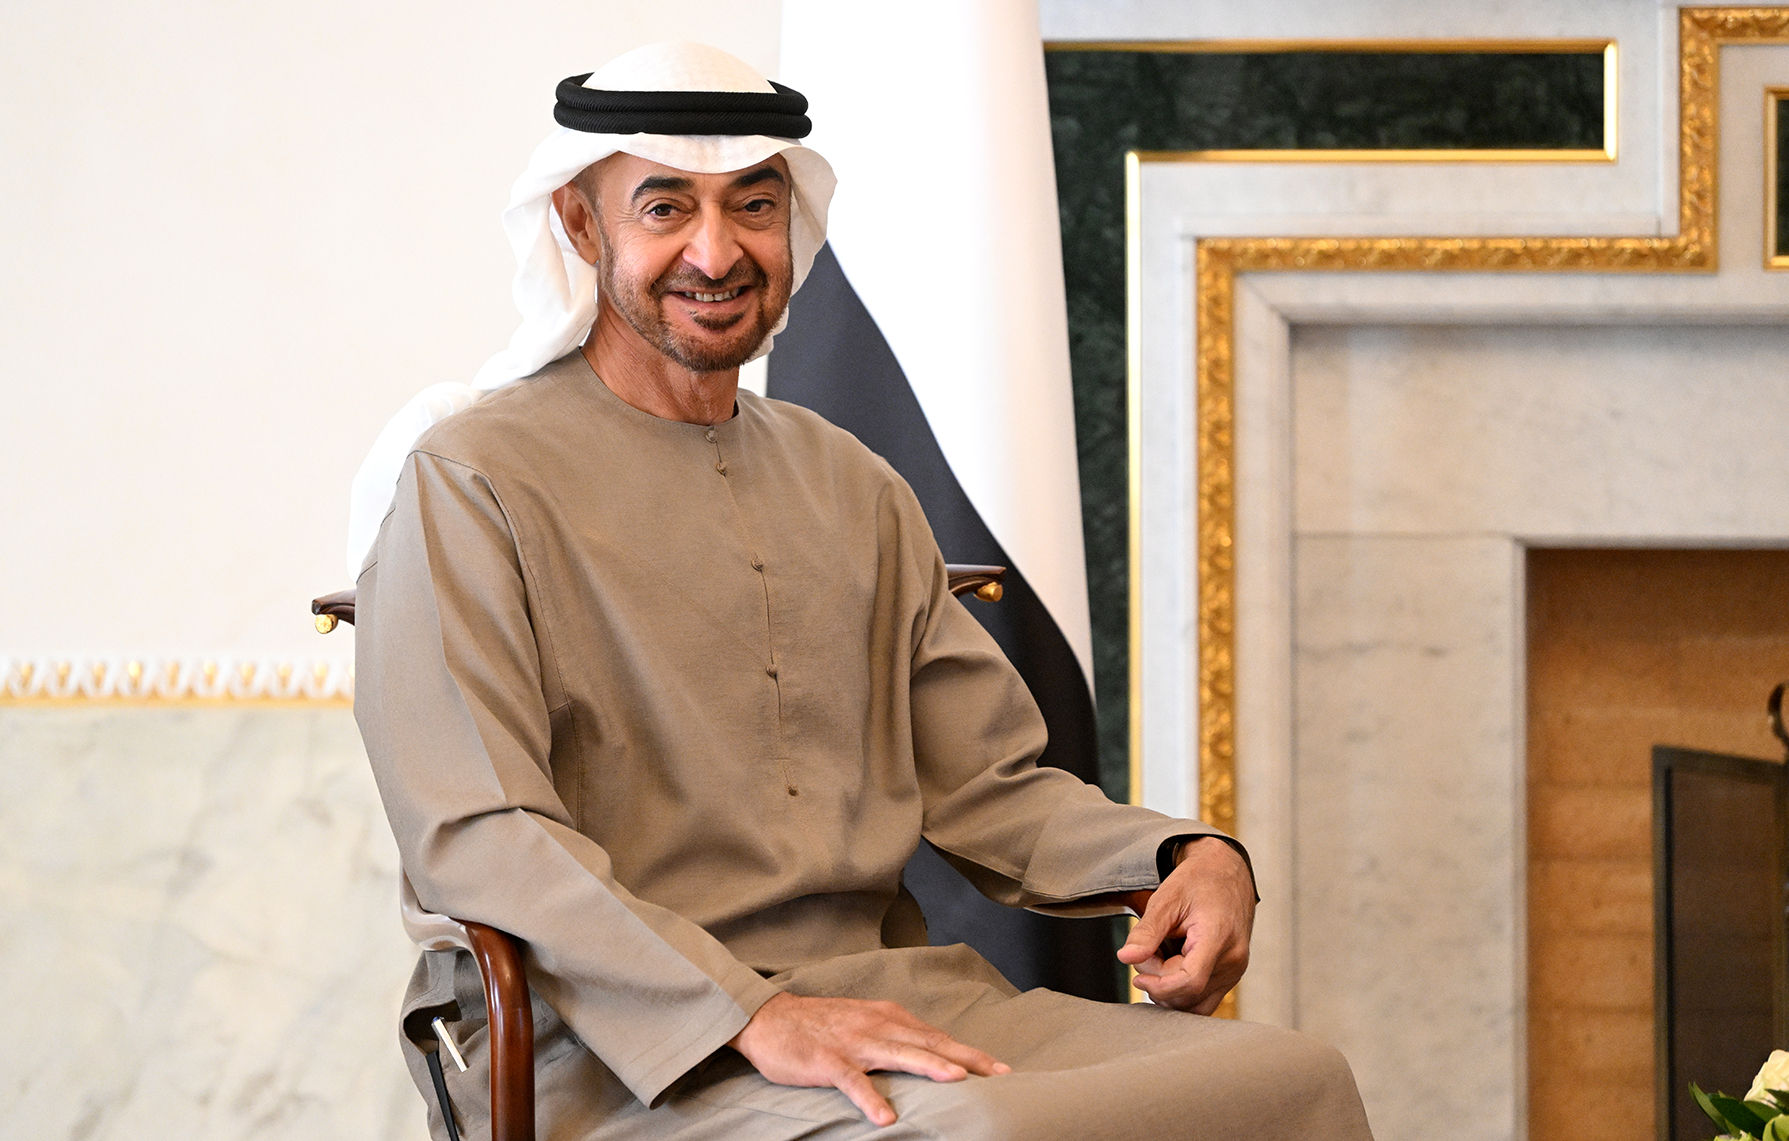 Sheikh Mohamed bin Zayed Al Nahyan 